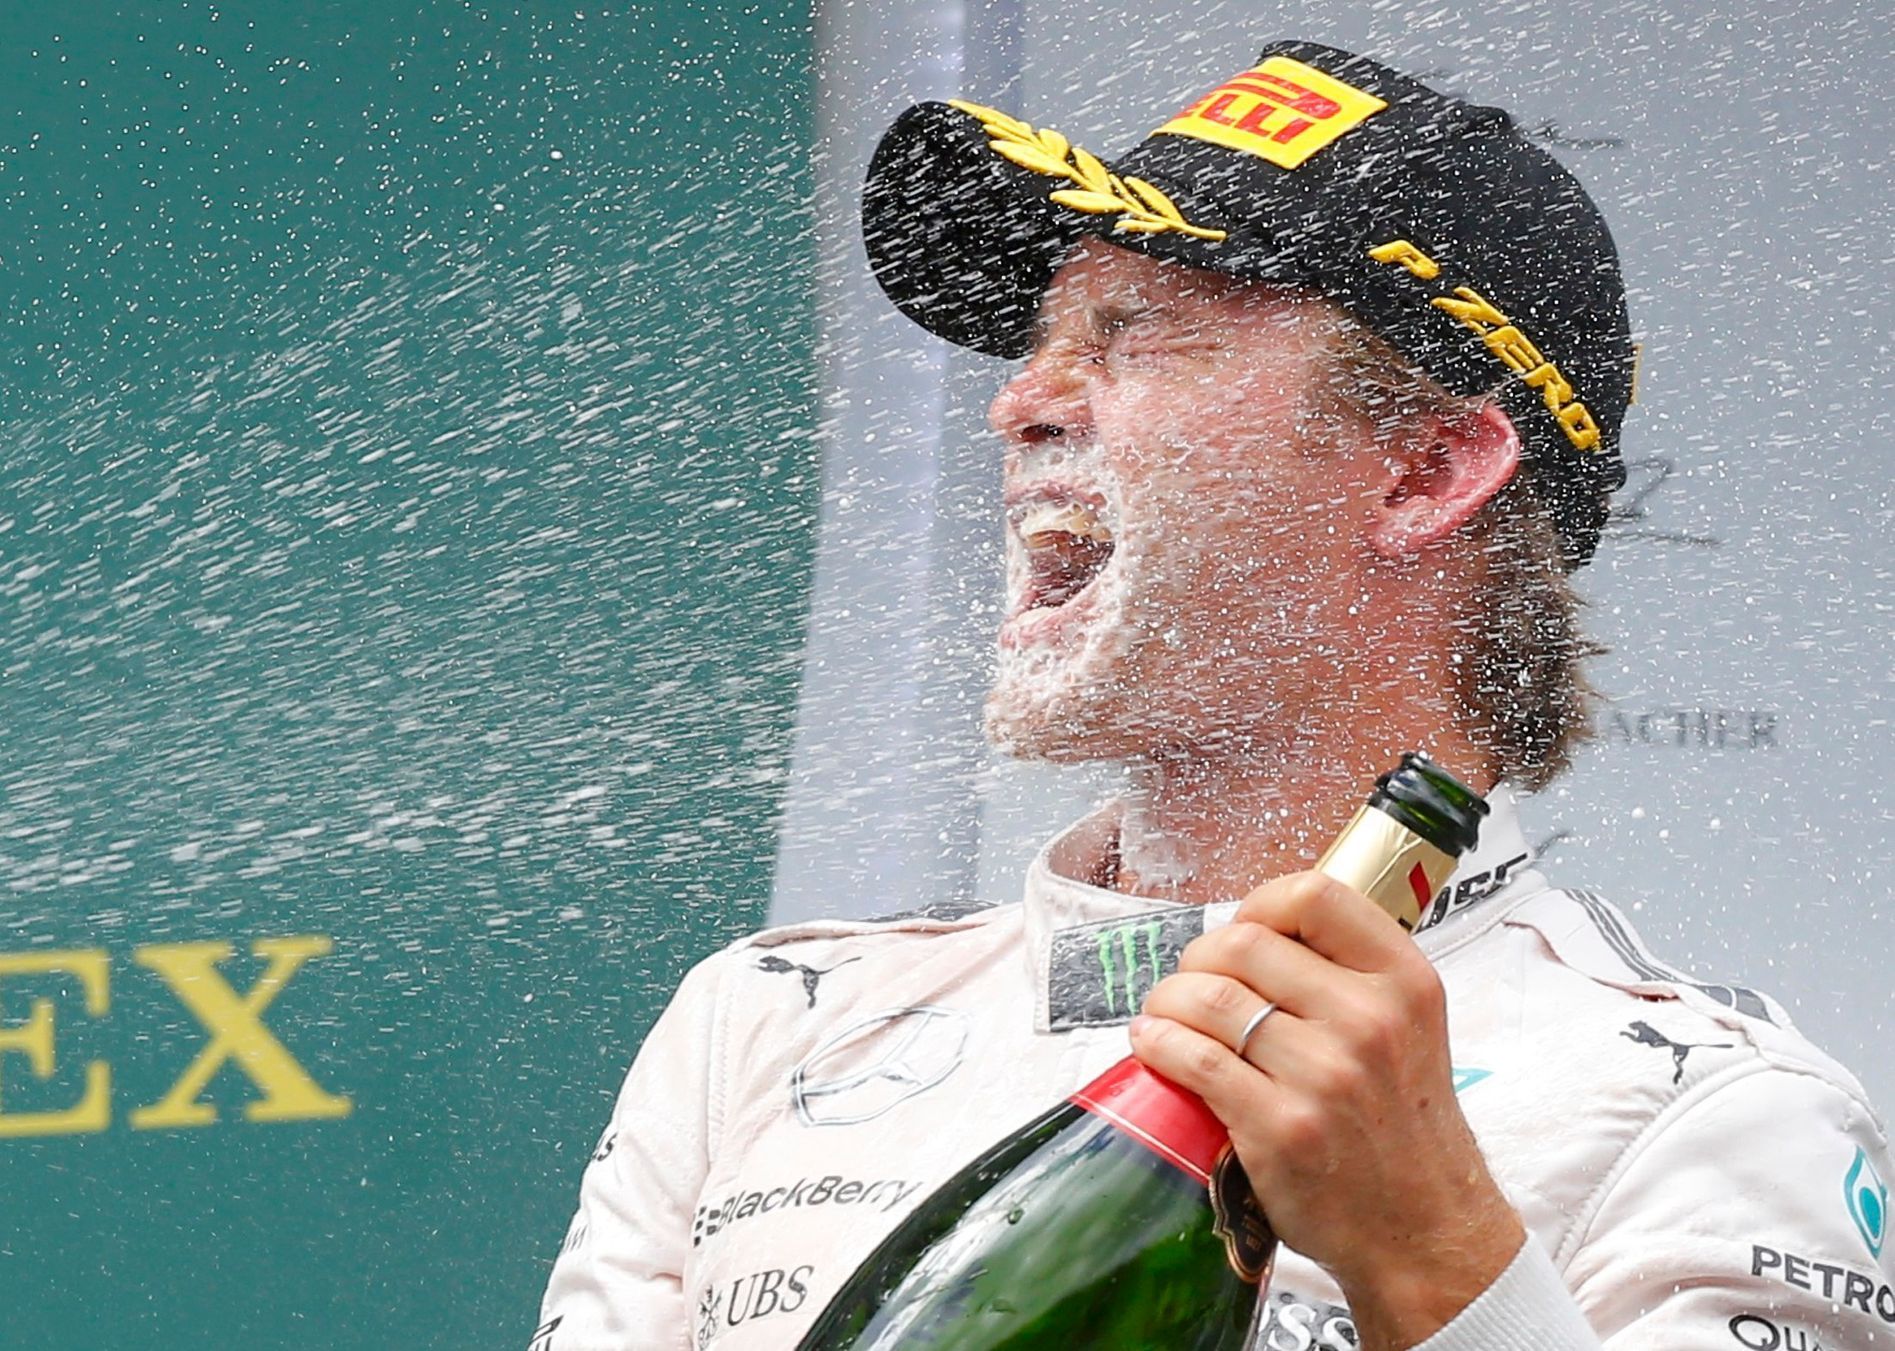 Mercedes Formula One driver Rosberg of Germany celebrates winning the Austrian F1 Grand Prix in Spielberg